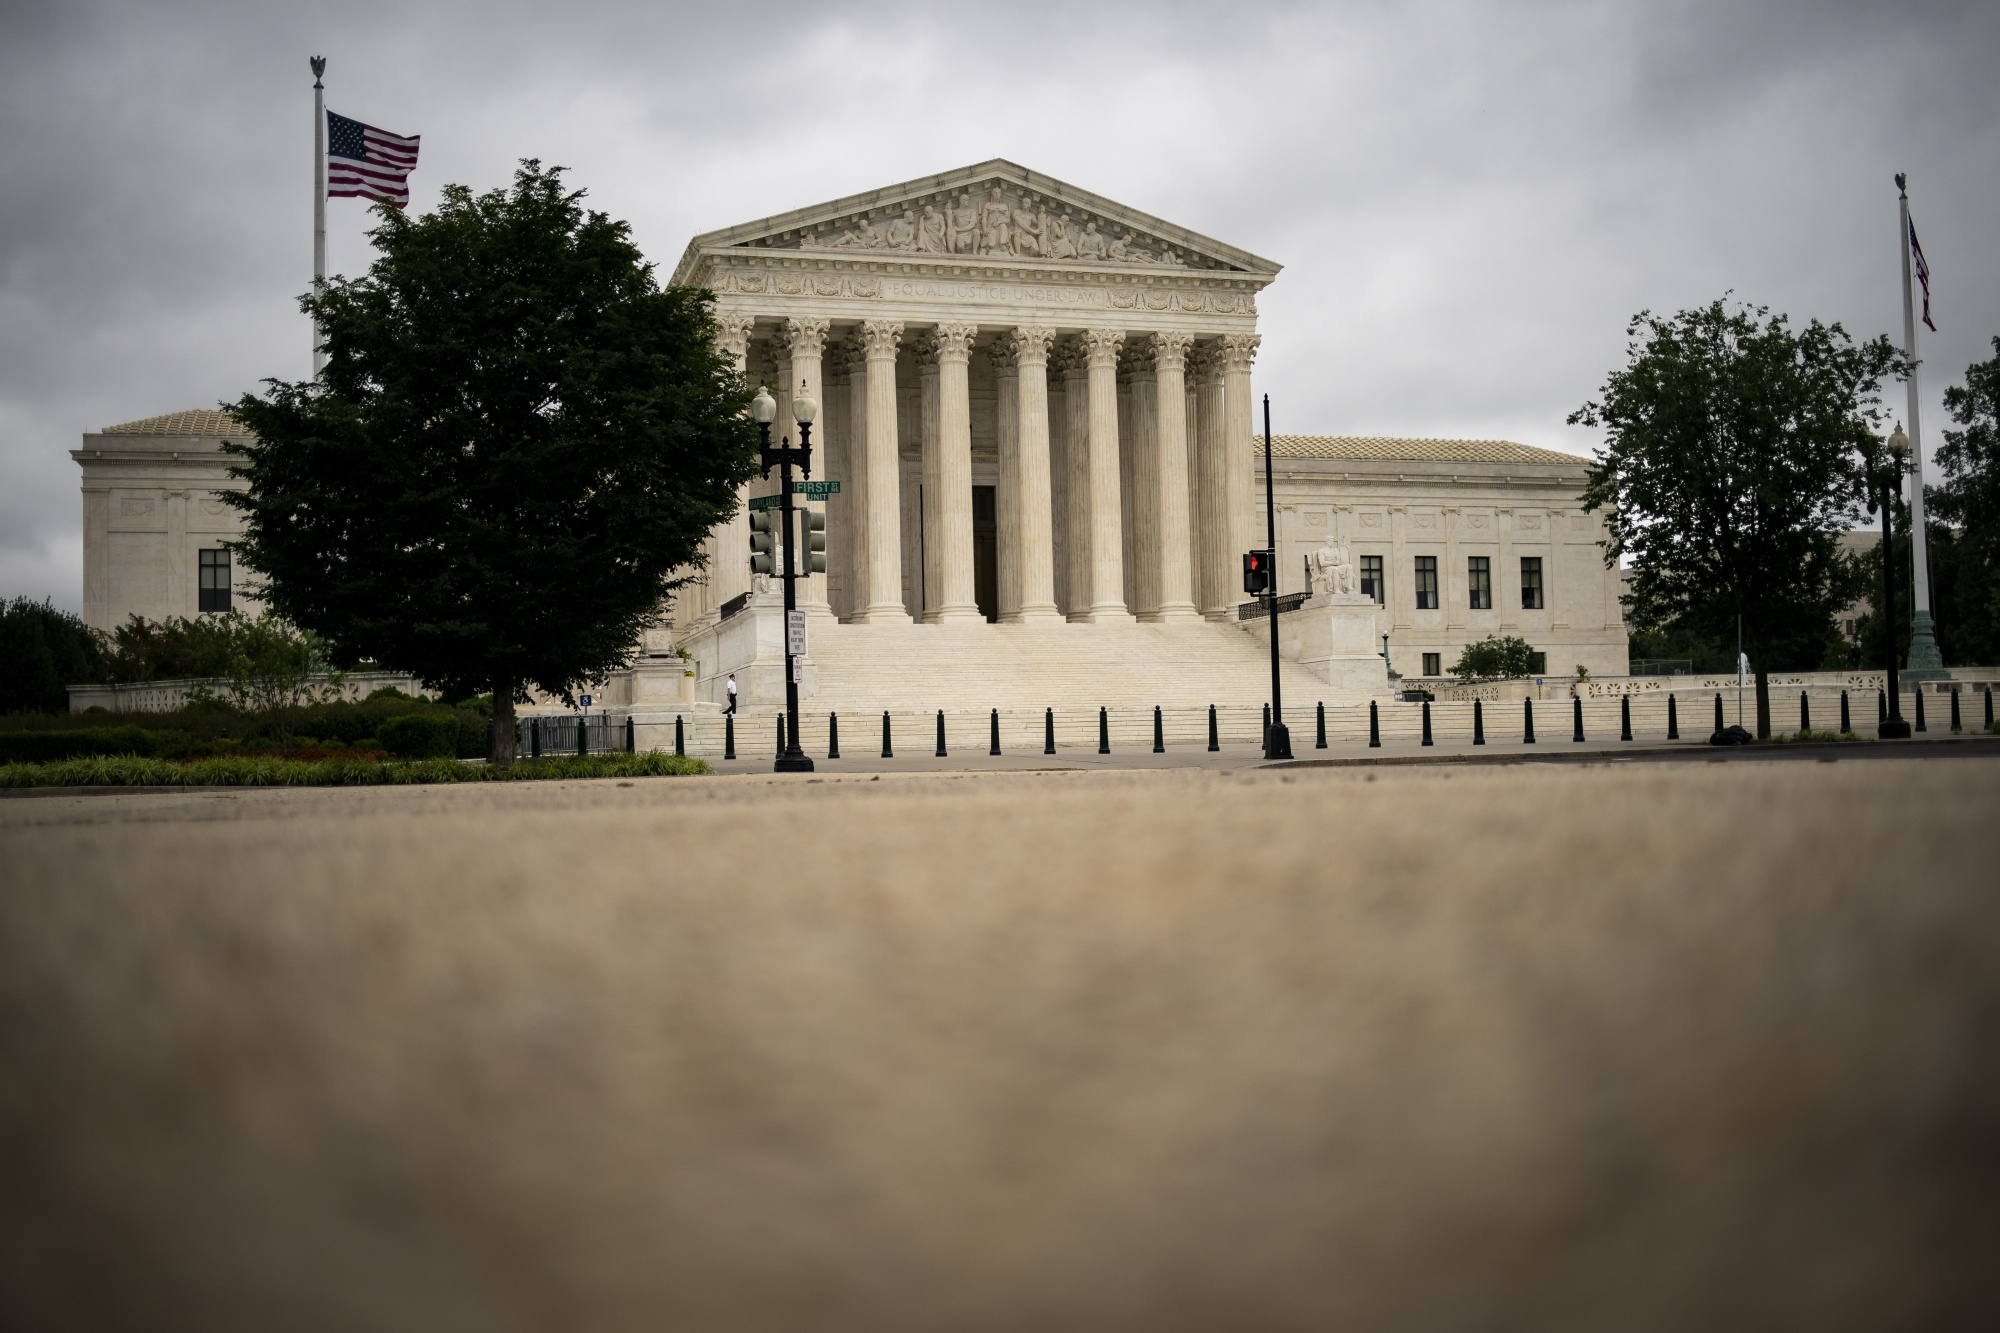 The U.S. Supreme Court building&nbsp;in Washington, D.C.